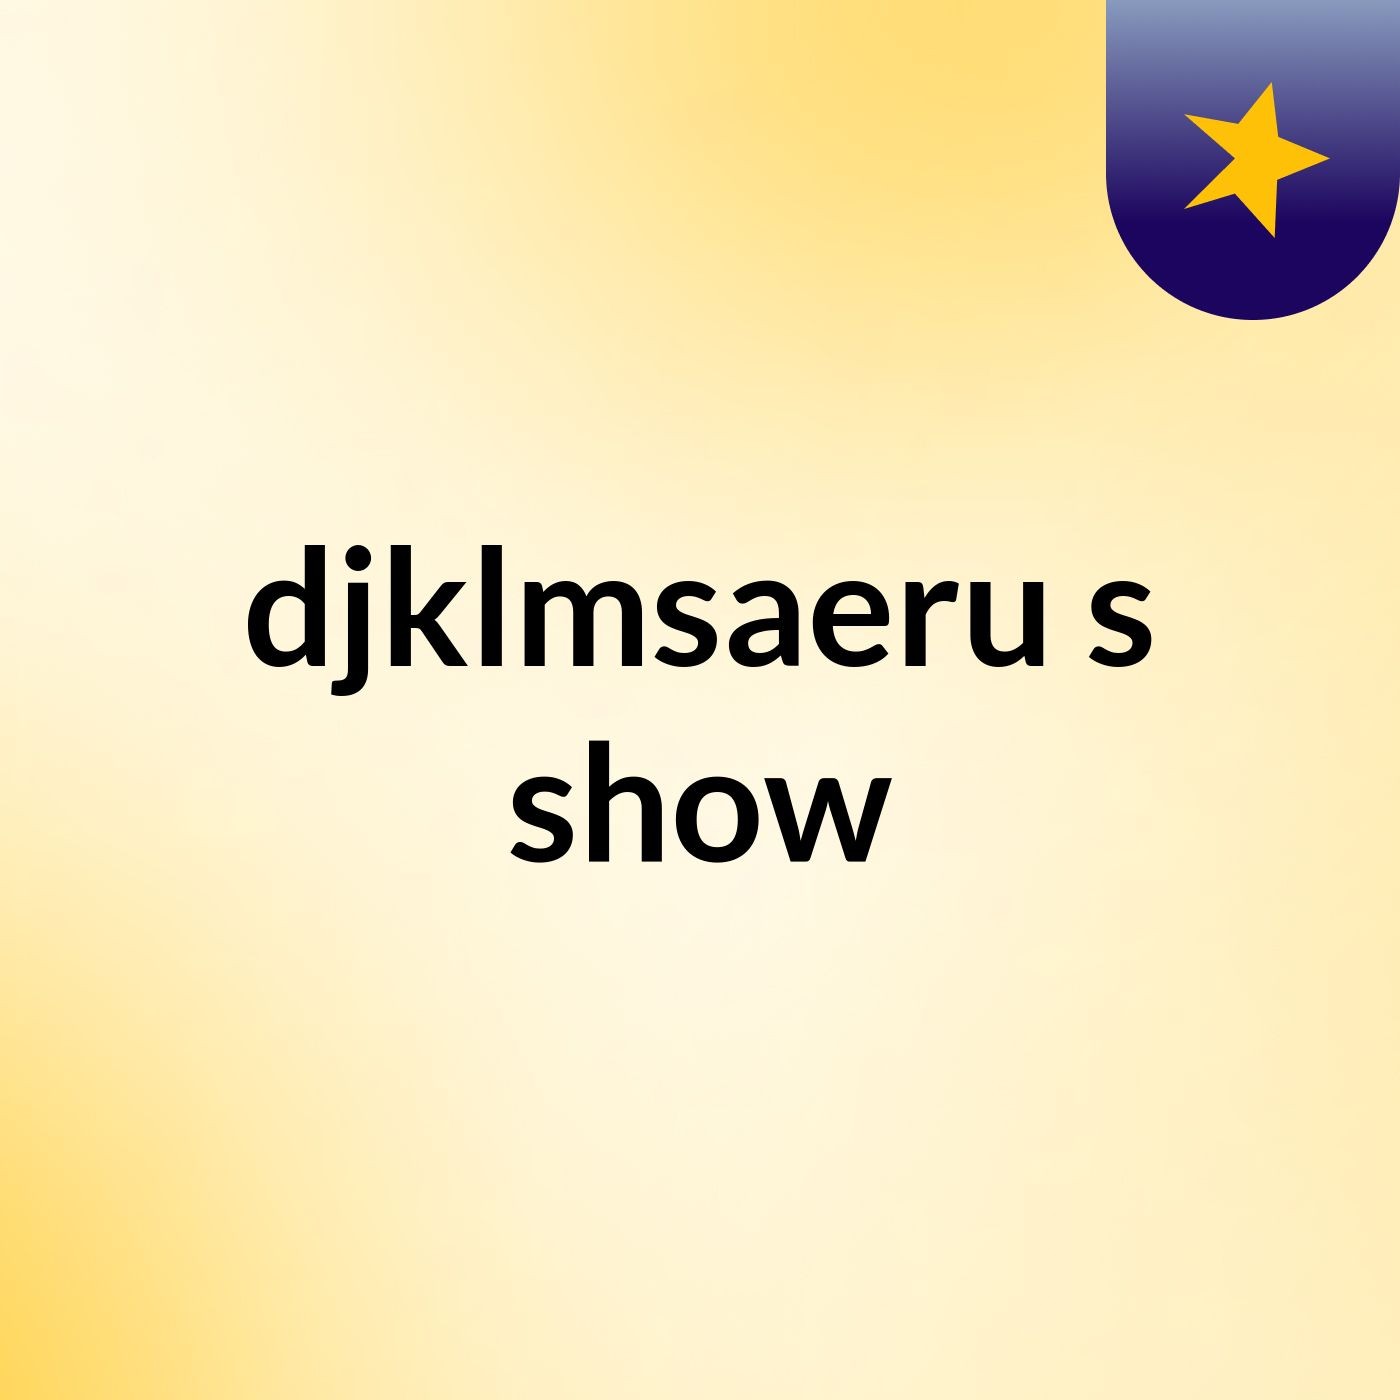 djklmsaeru's show